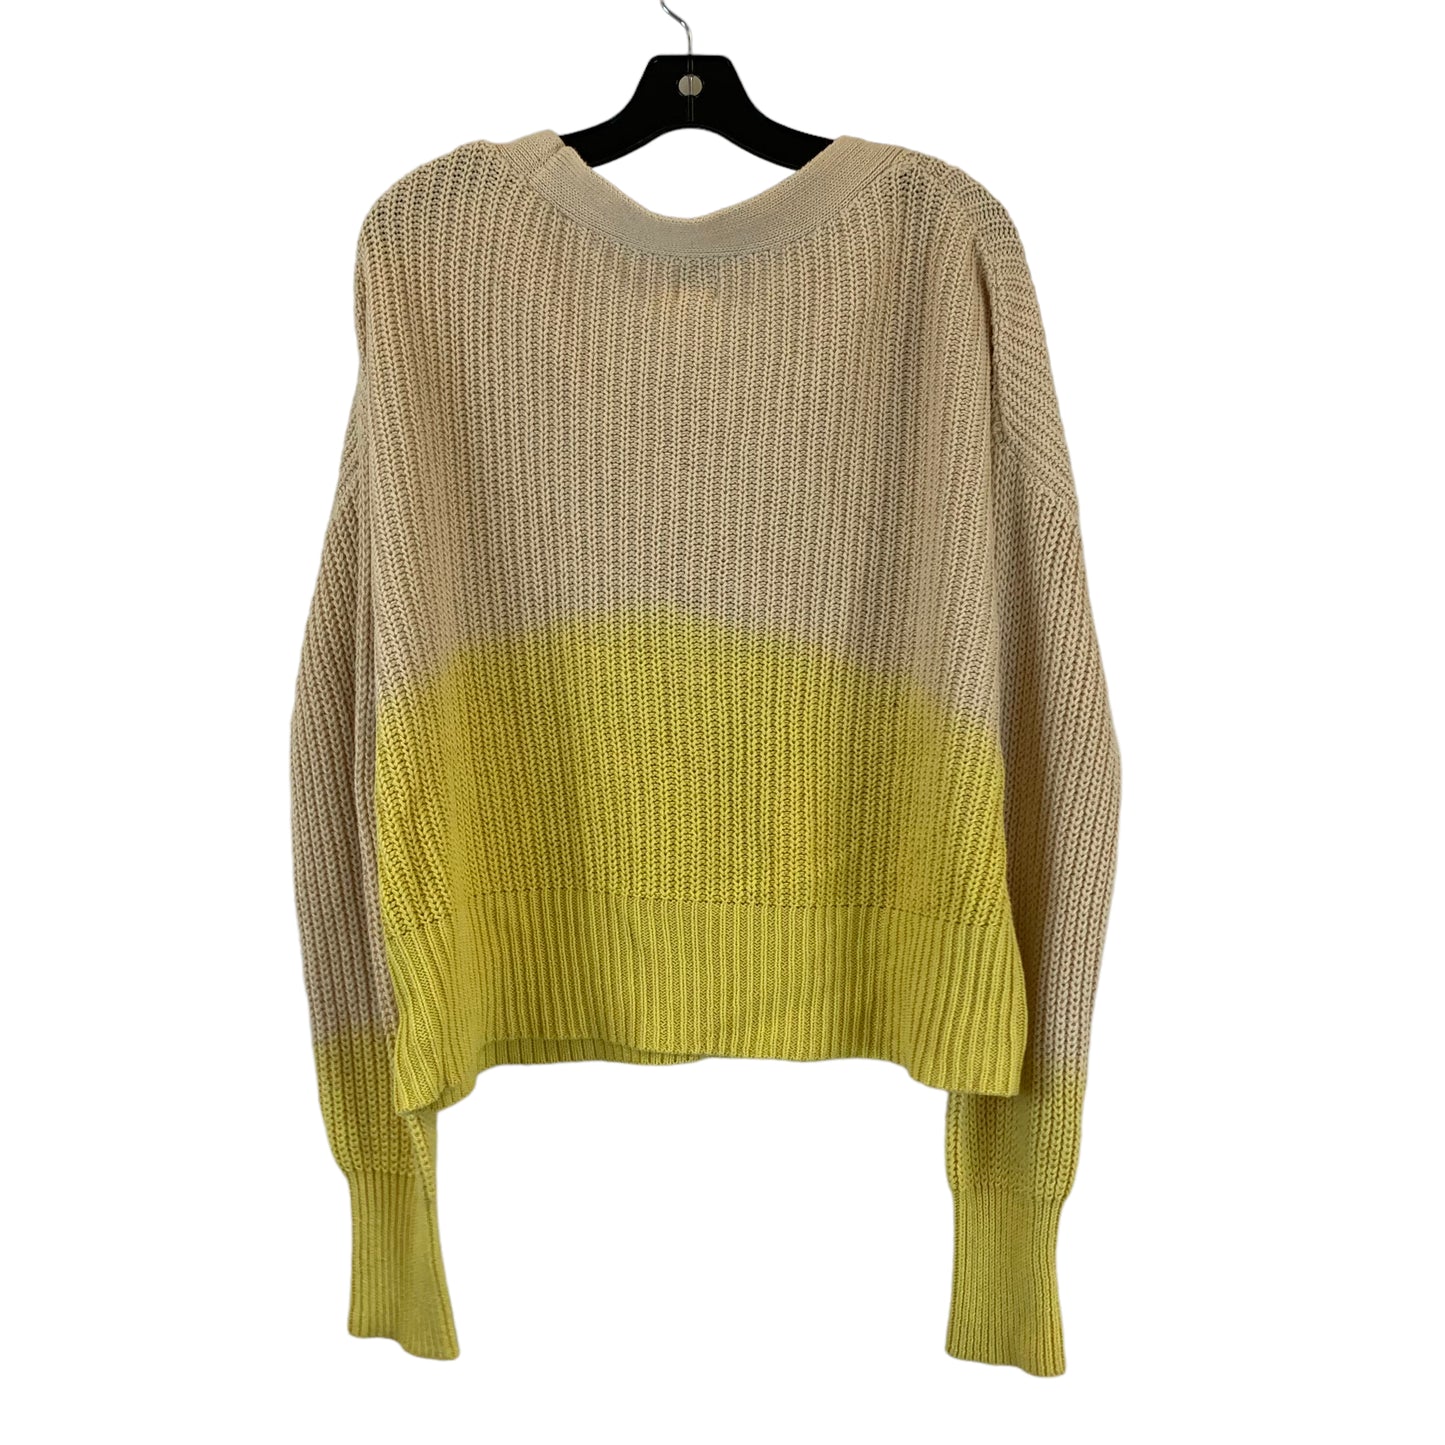 Sweater By Roan + Ryan Size: L